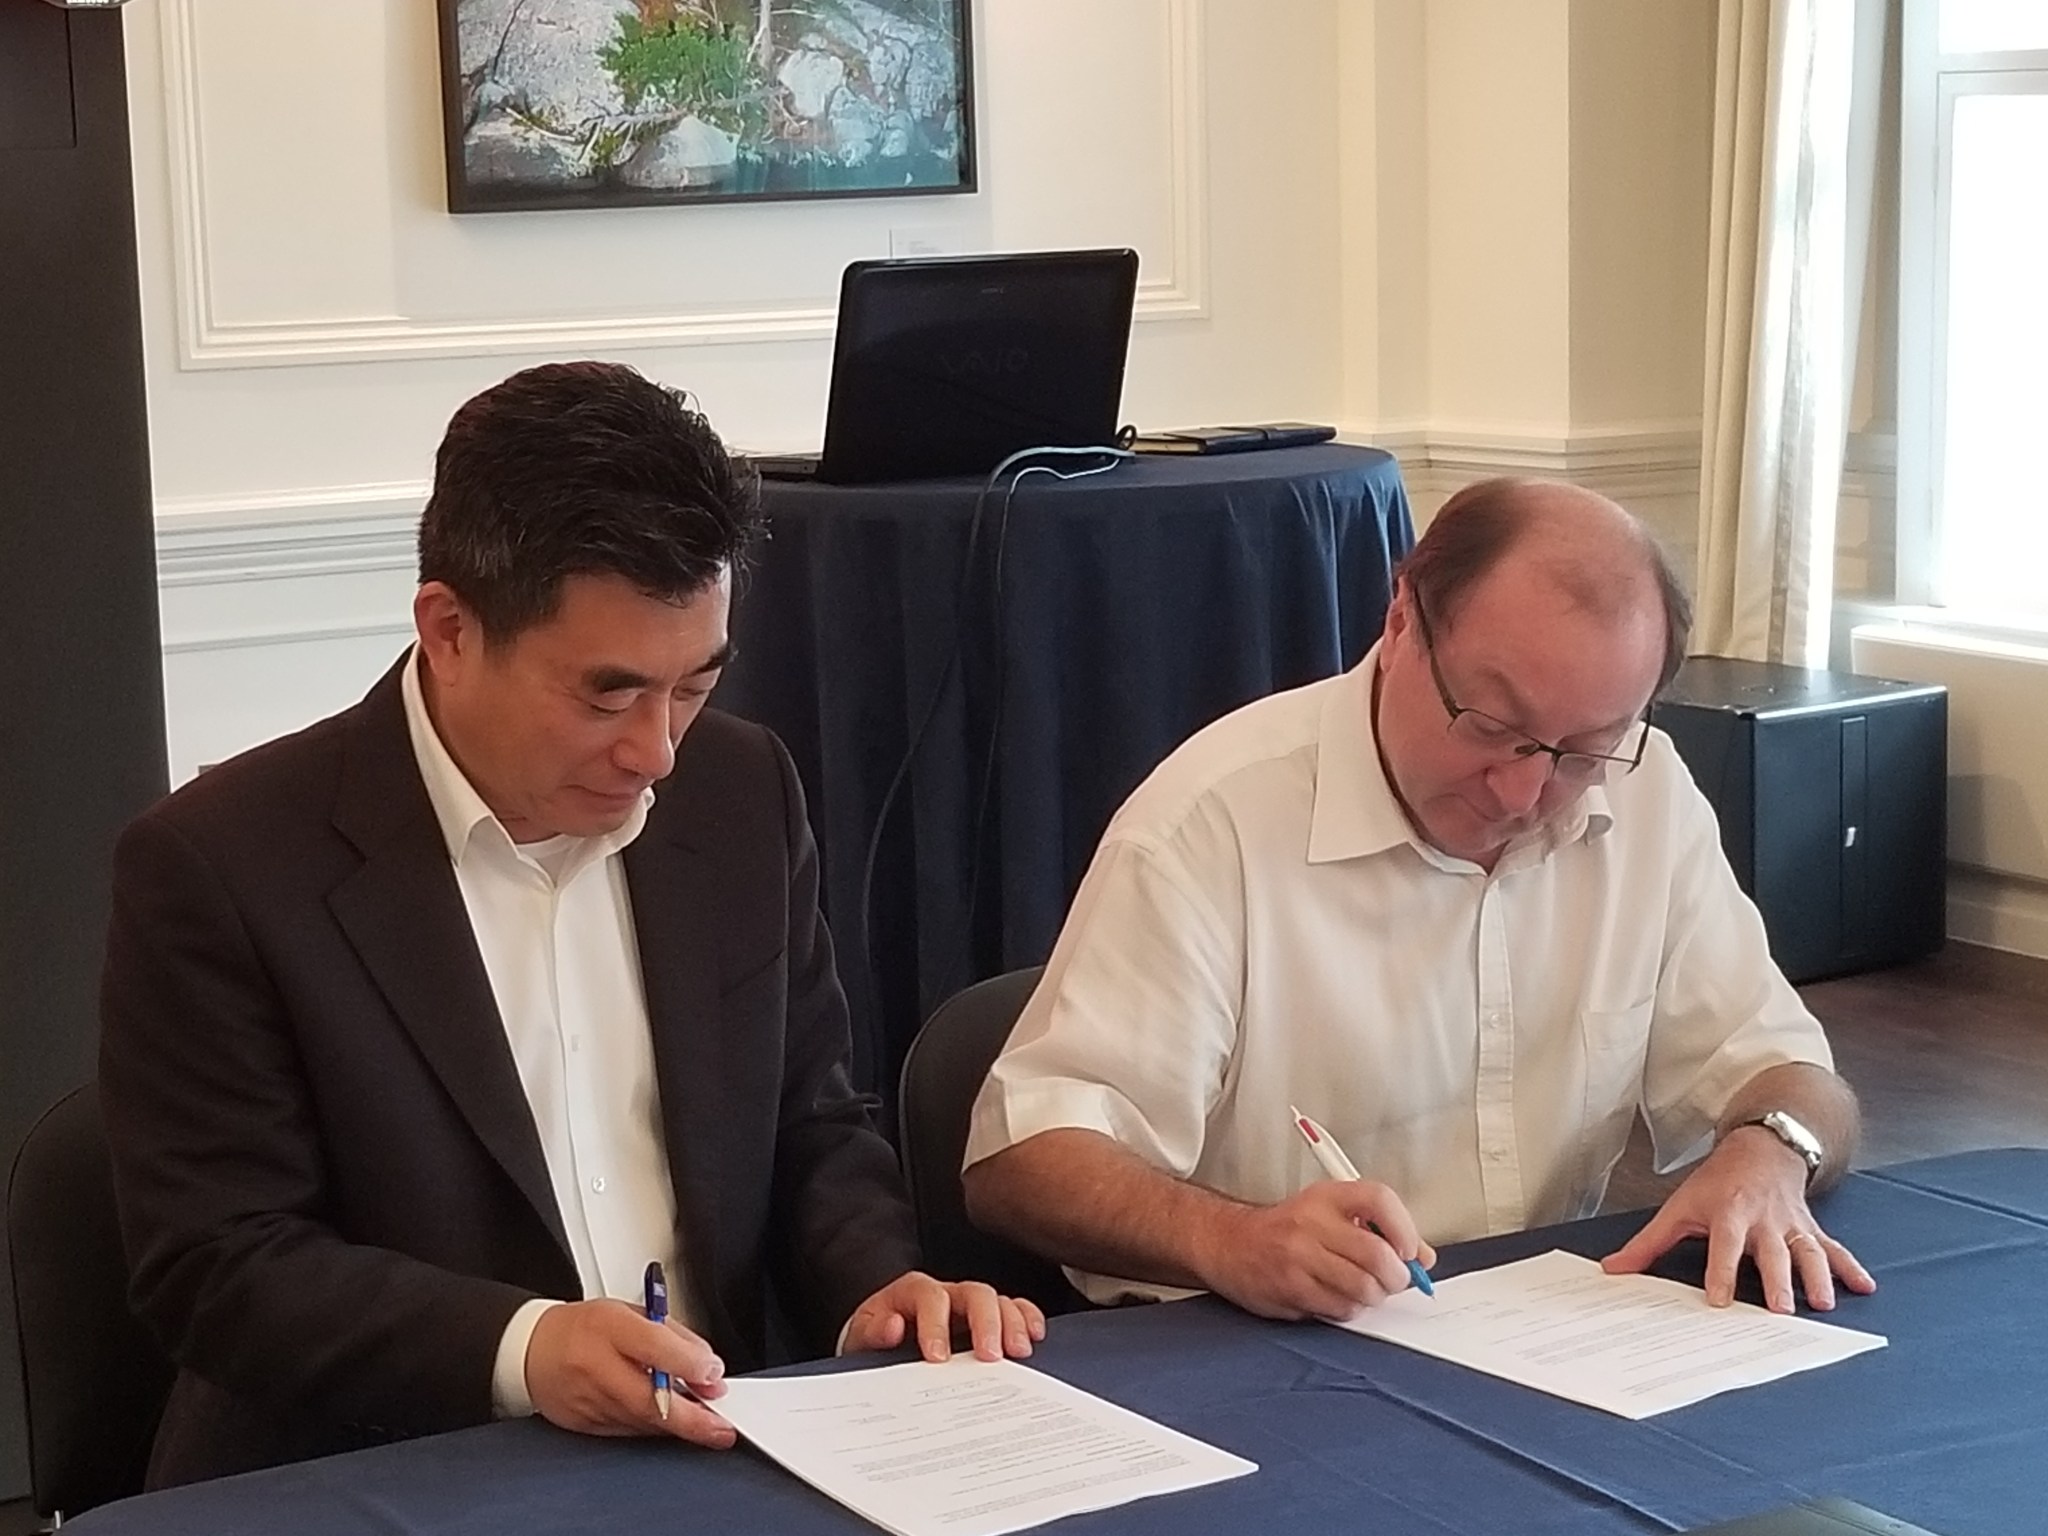 Dr. Jaiwon Shin of NASA (left) and Bruno Saigon of ONERA sign an agreement in London